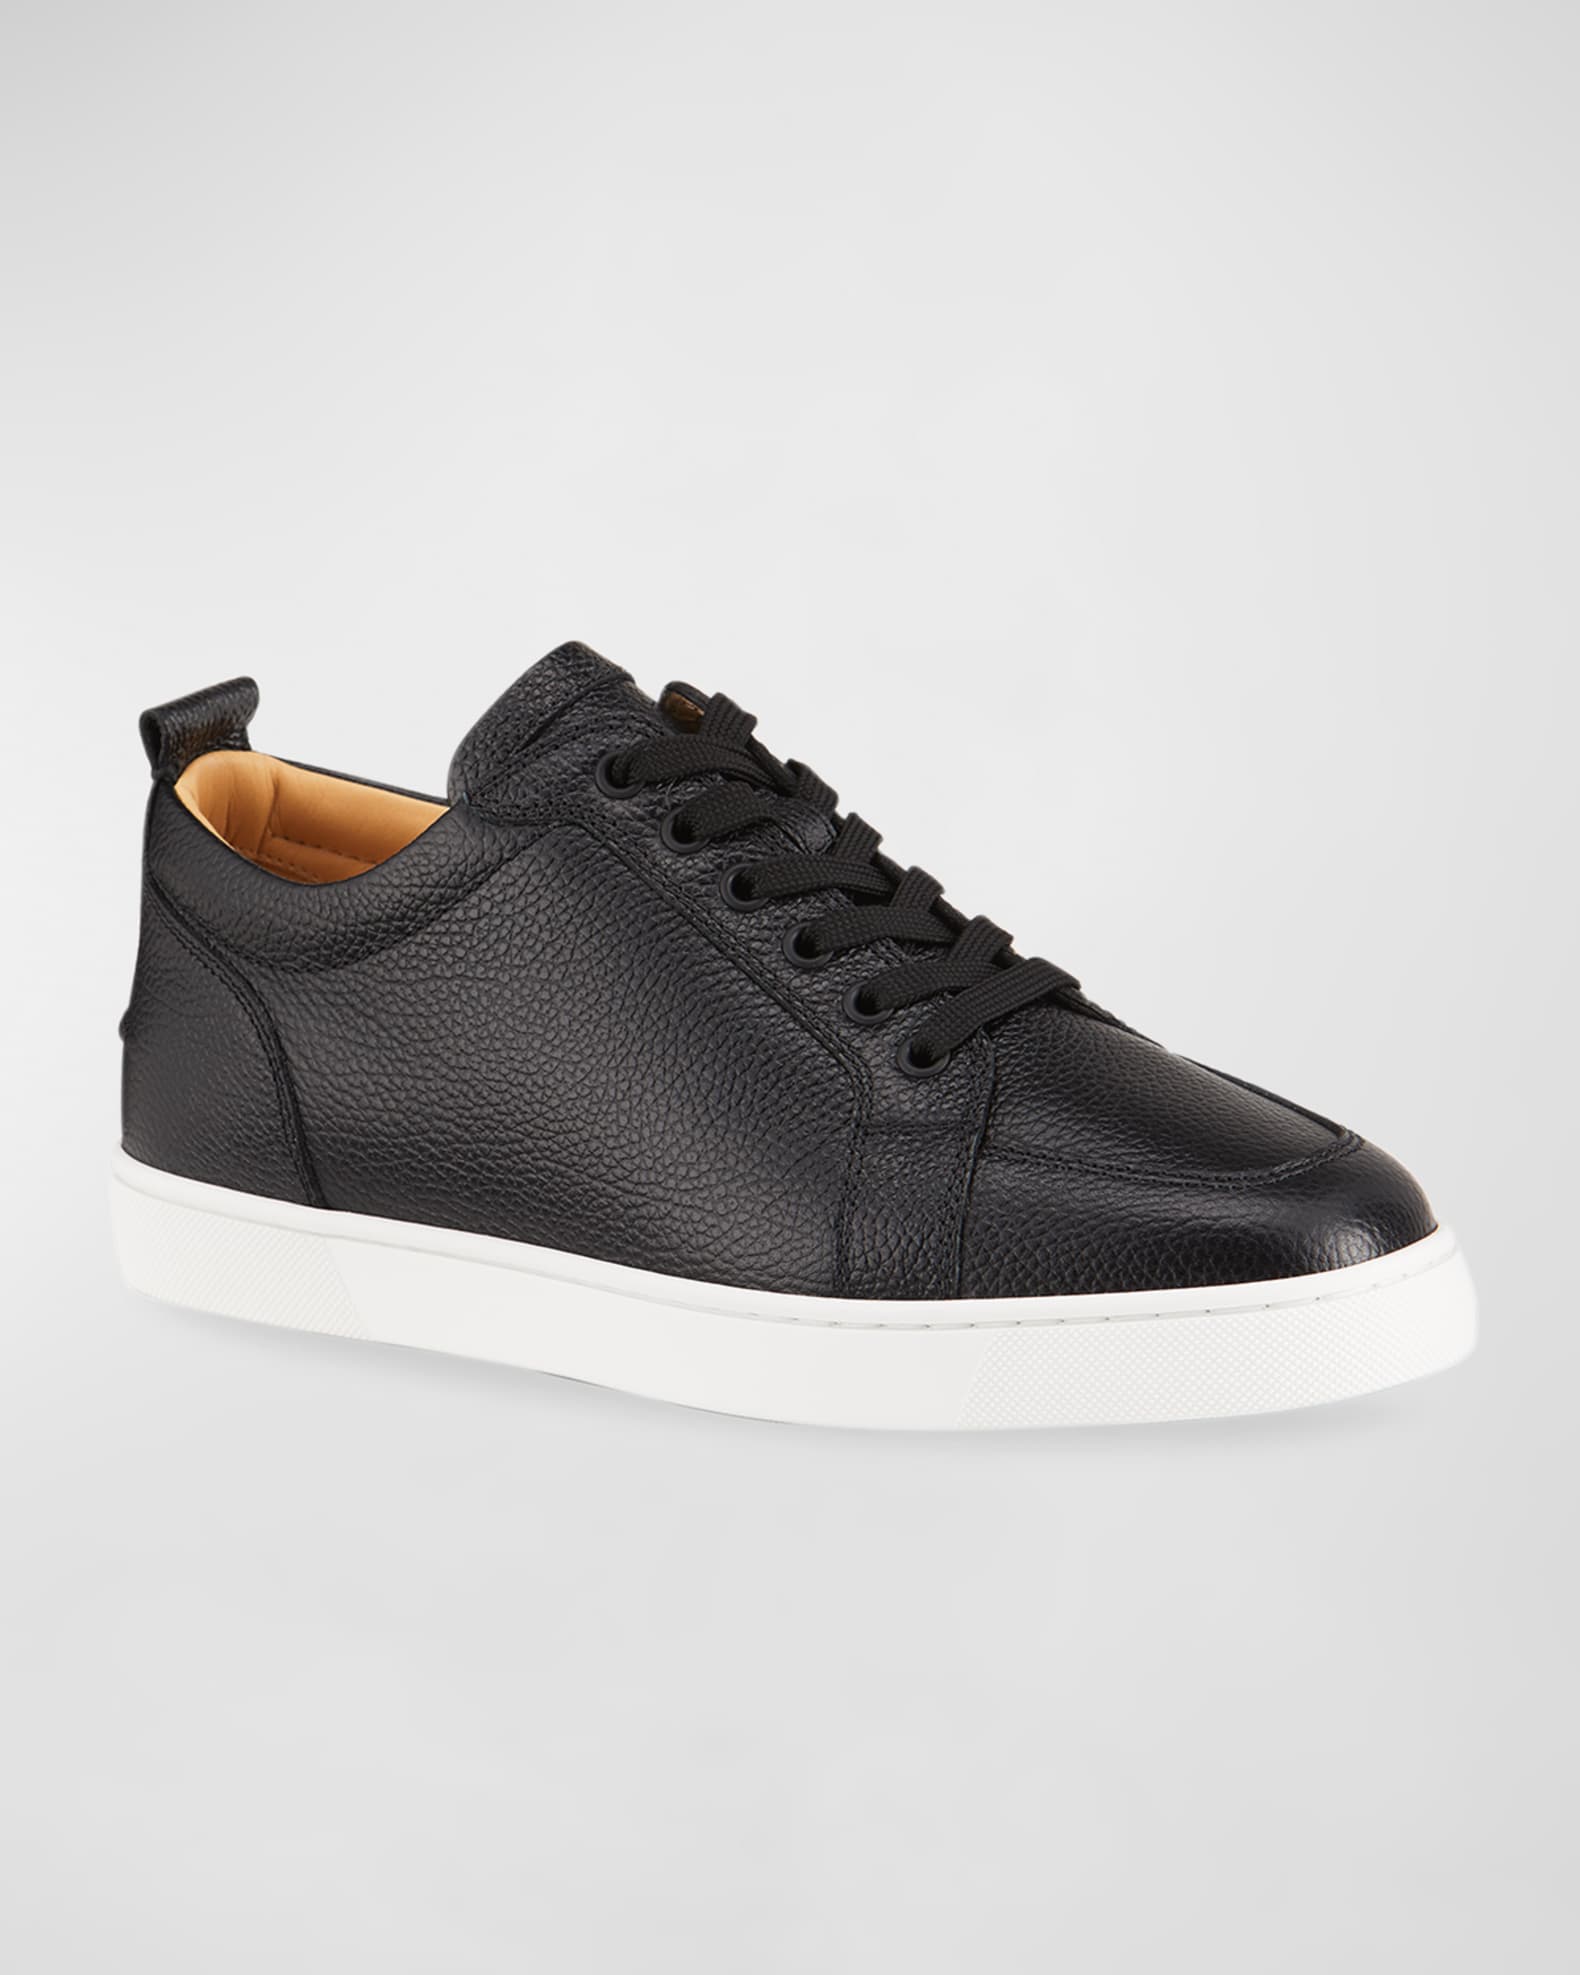 Christian Louboutin Men's Rantulow Leather Low-Top Sneakers | Neiman Marcus